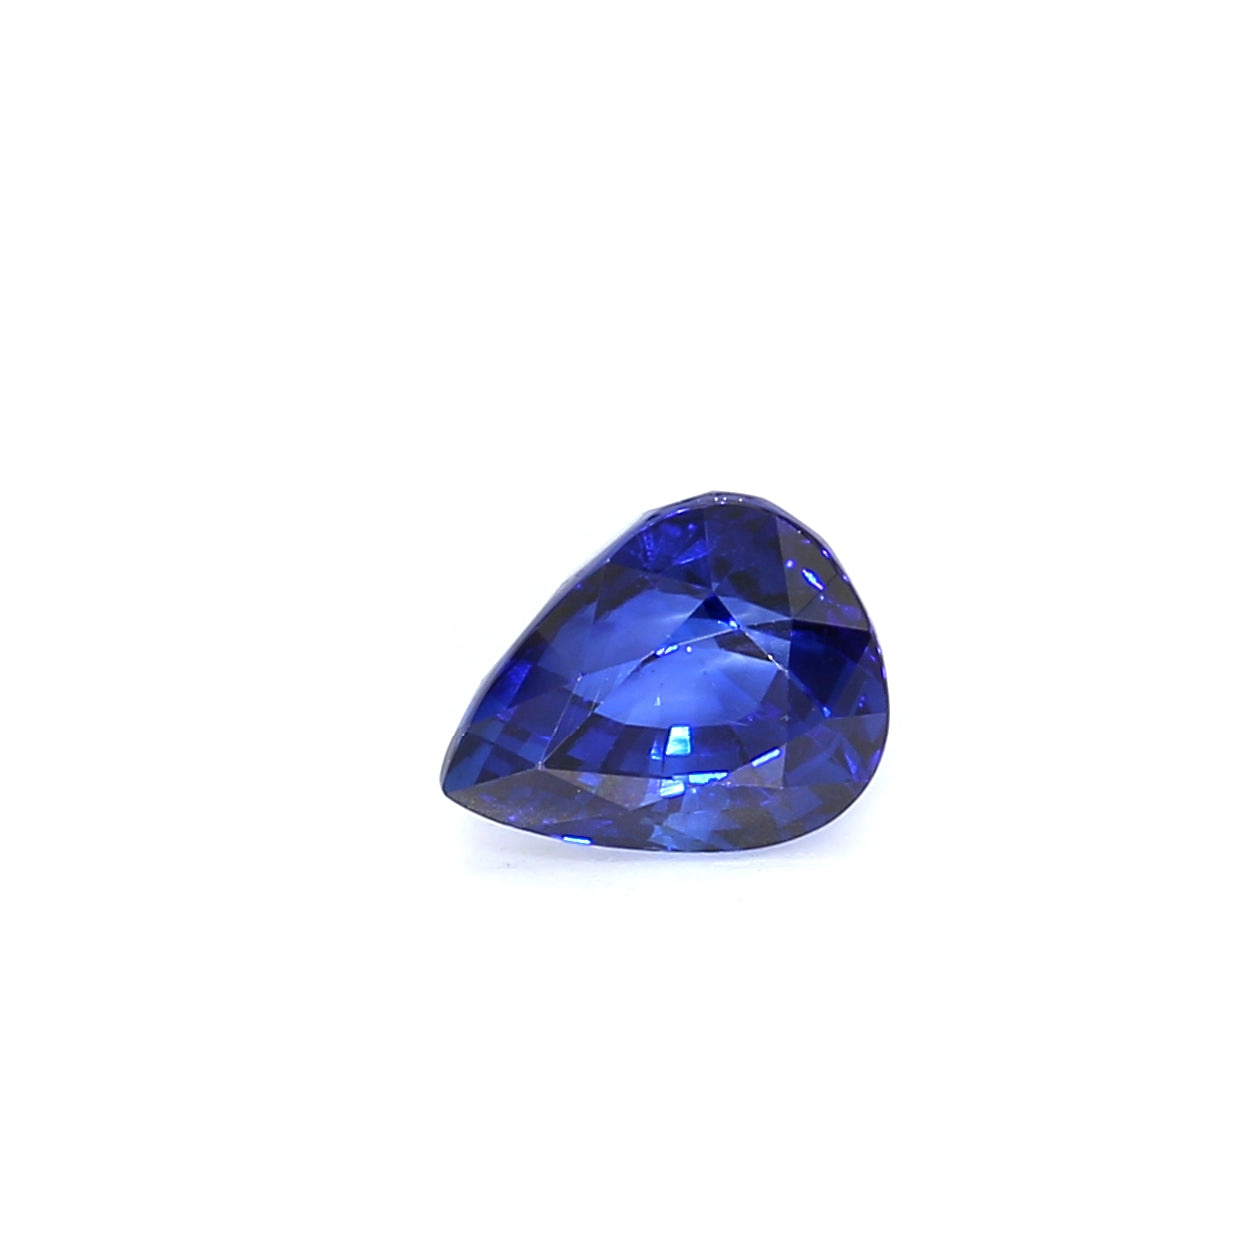 3.84ct Pear Shape Sapphire Pair, Heated, Sri Lanka - 7.80 x 6.33mm